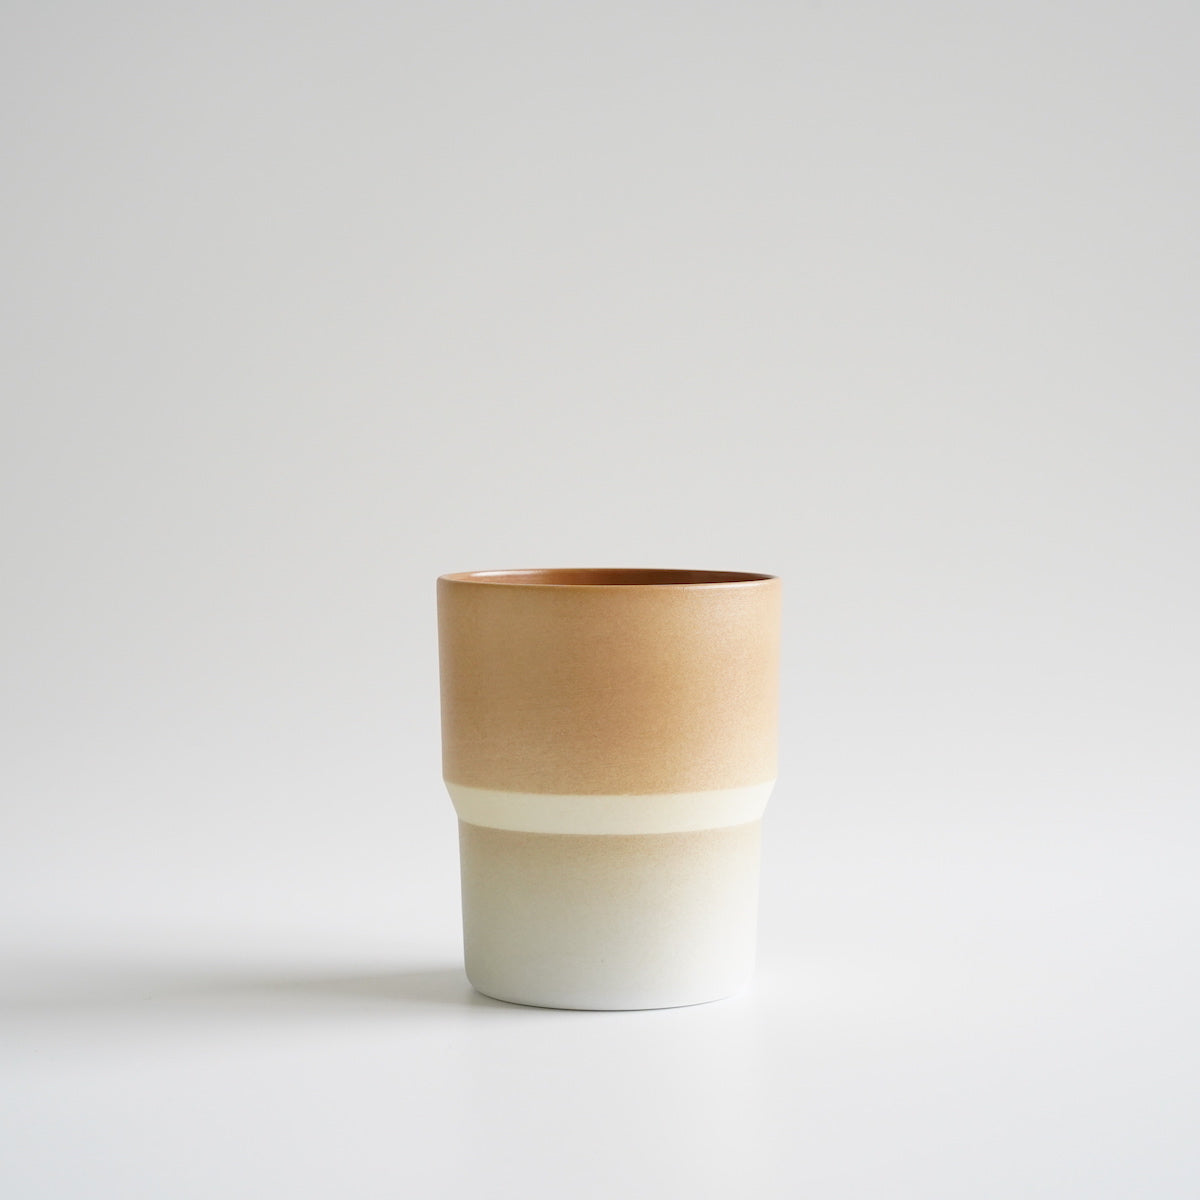 1616 / arita japan S&B "Colour Porcelain" Mug Light Brown